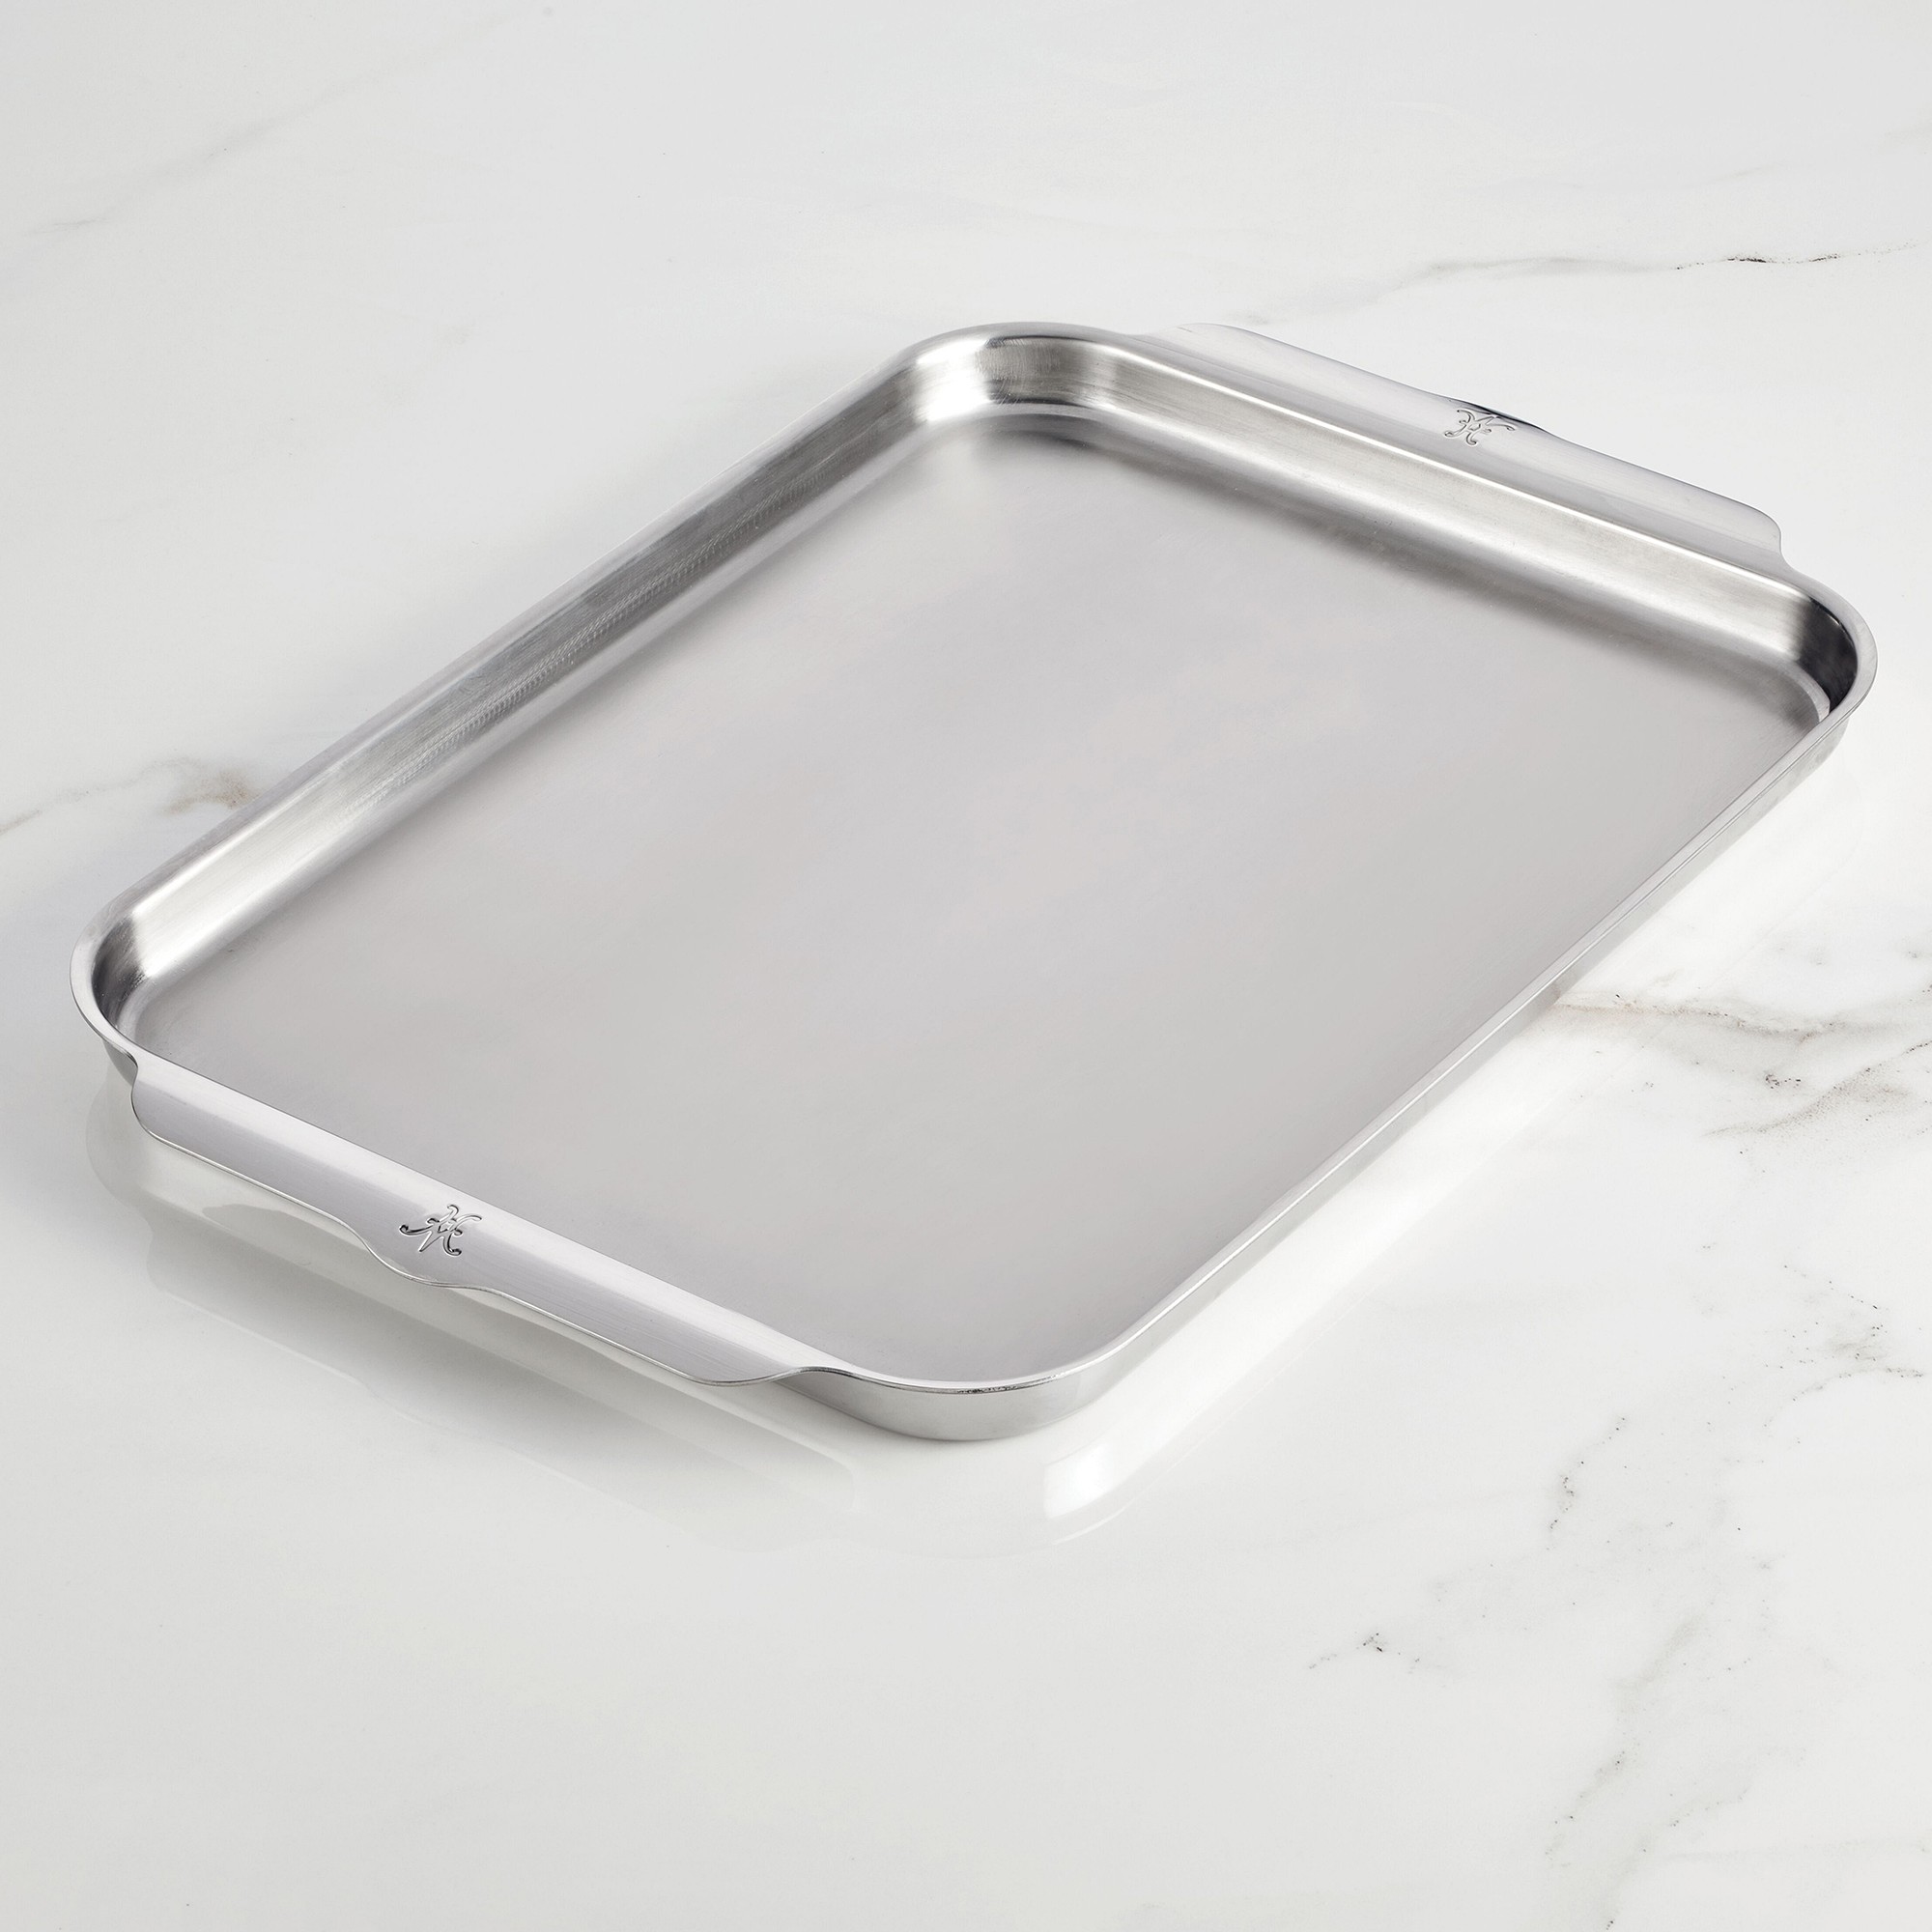 Hestan Provisions OvenBond Stainless-Steel Half Sheet Pan